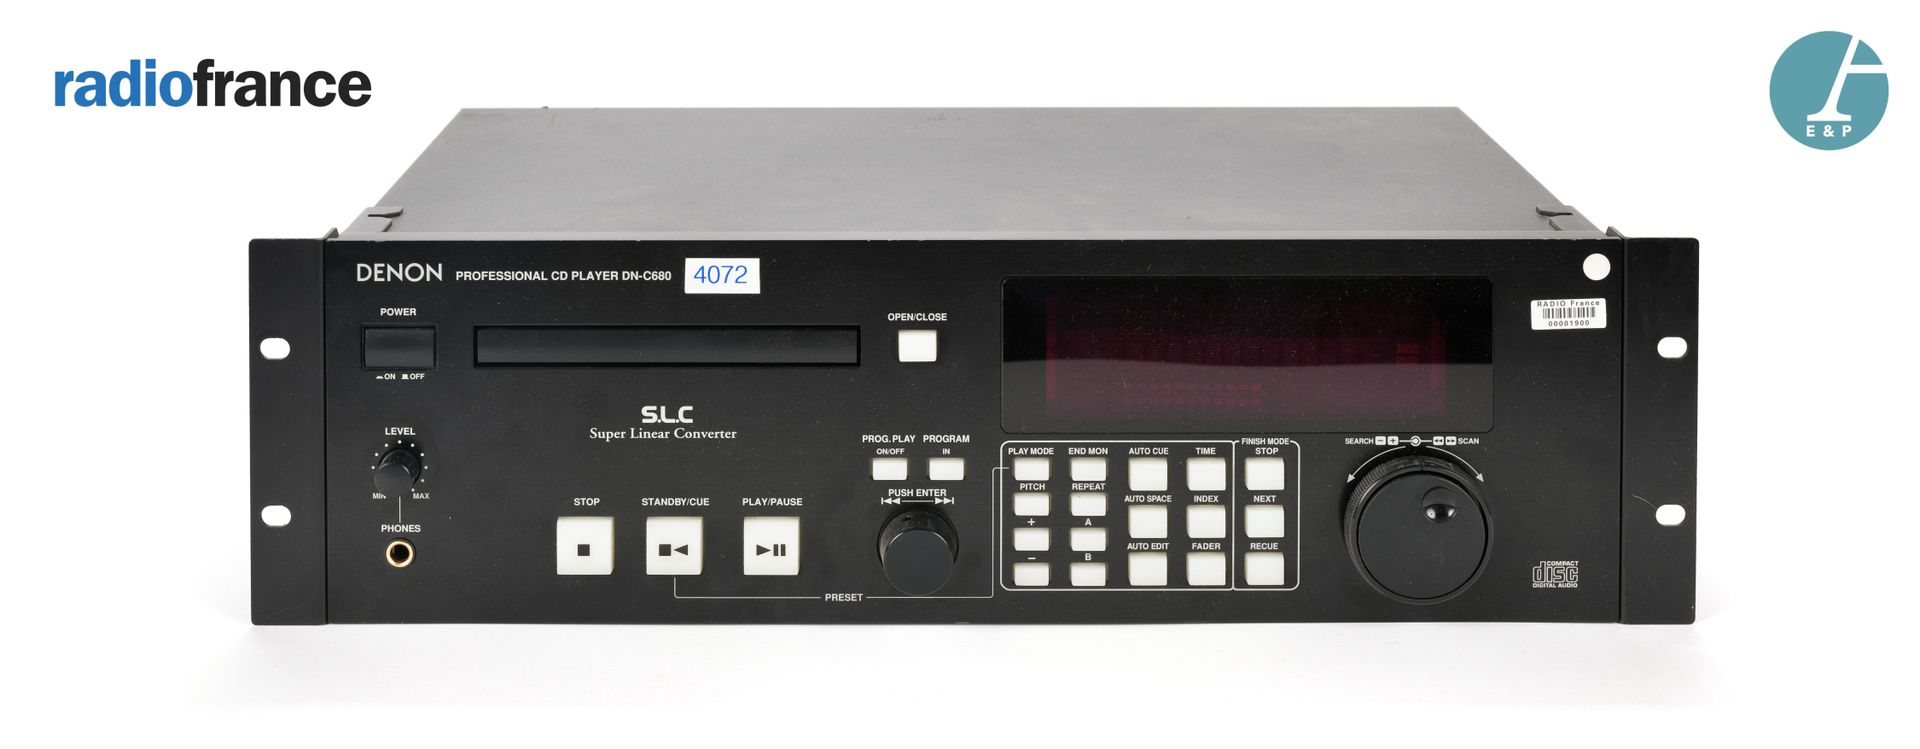 Null DENON，CD播放器DN-C680。

高：13厘米 - 宽：48.5厘米 - 深：29厘米

改革后的设备，使用状况，操作不保证。